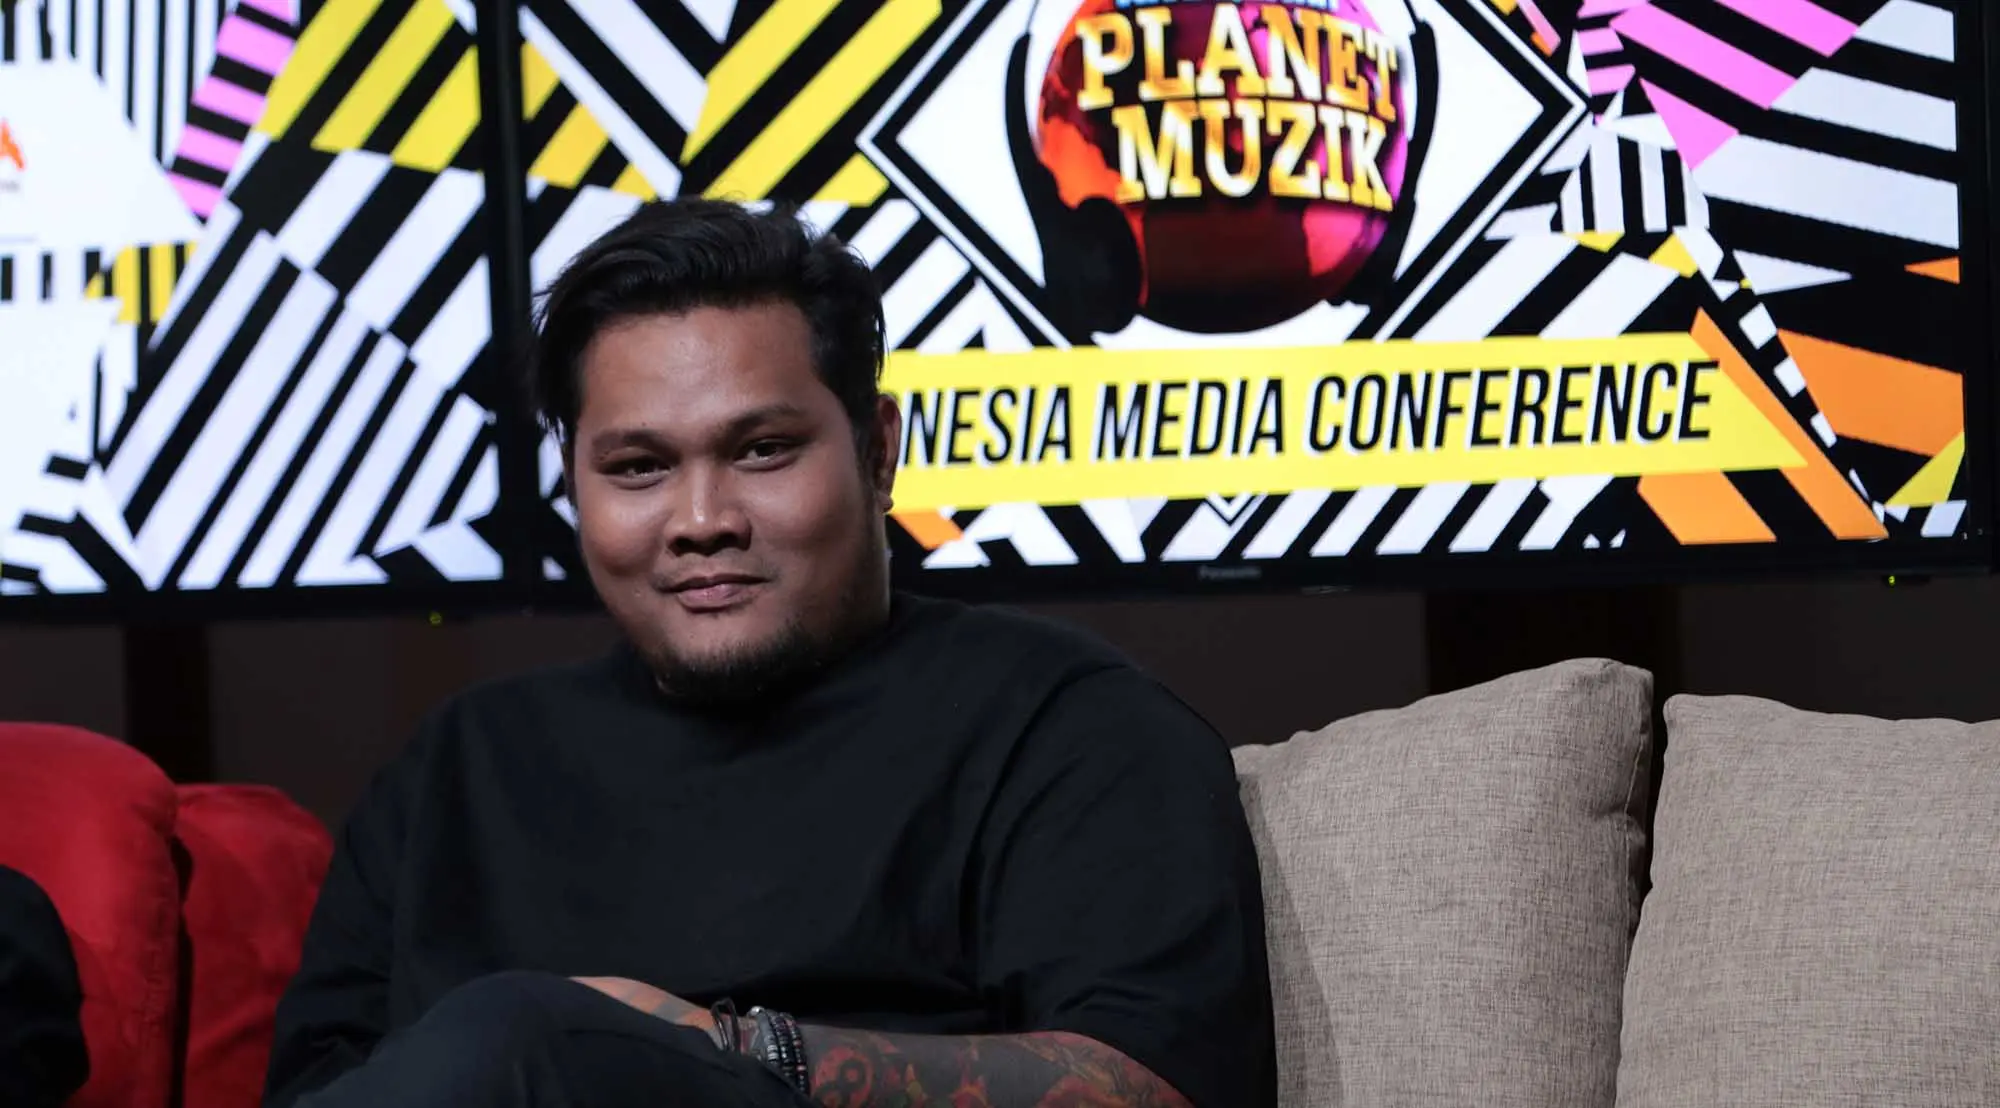 Anugerah Planet Muzik Indonesia 2017 (Deki Prayoga/Bintang.com)